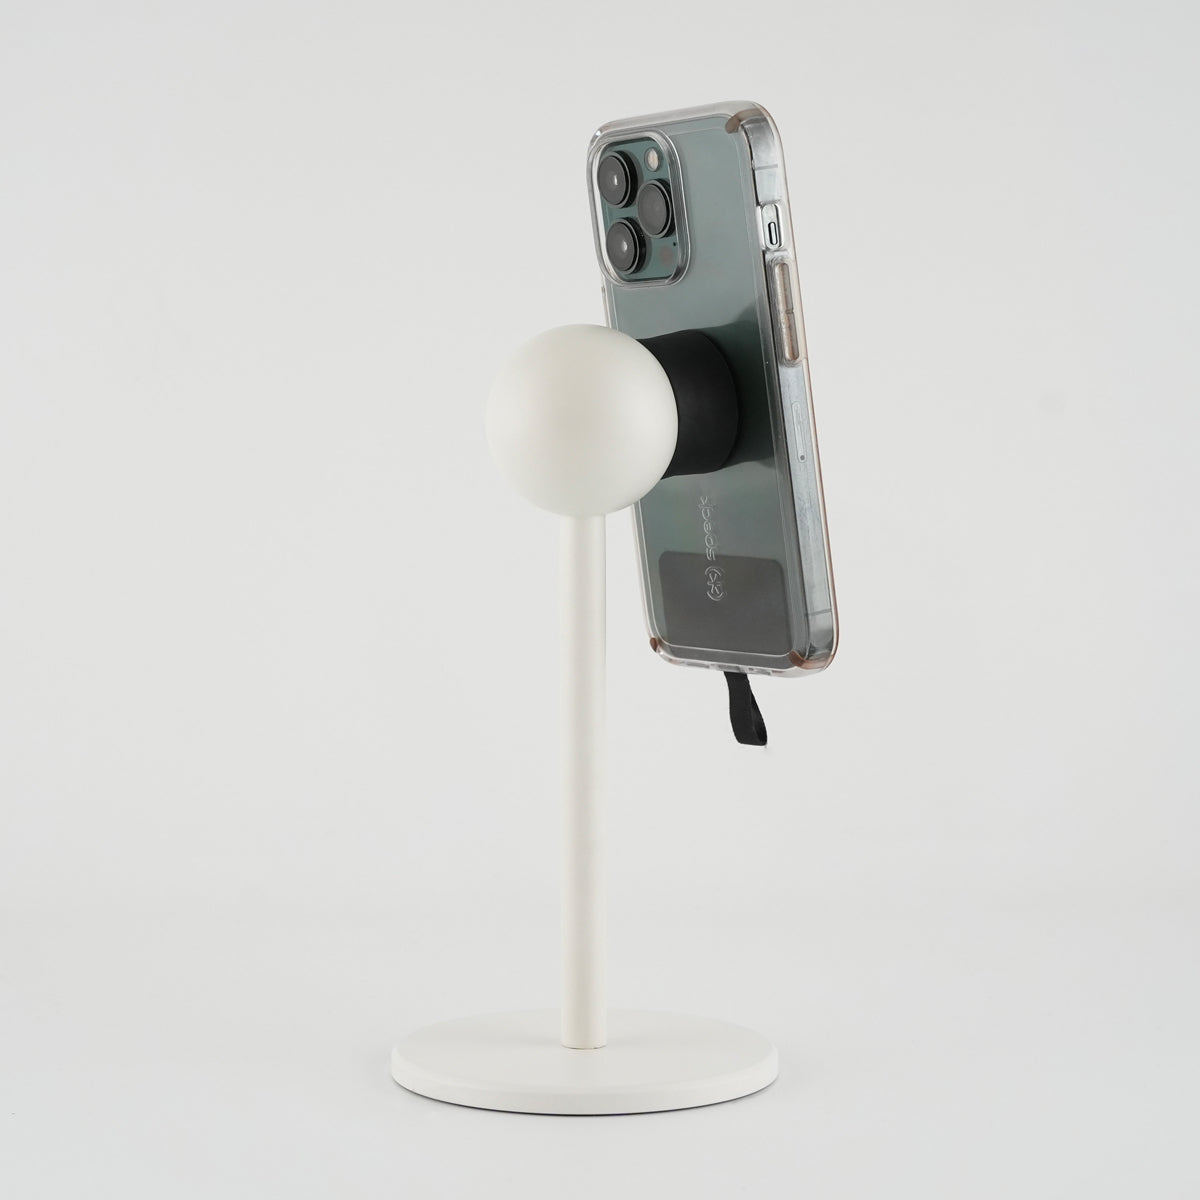 White Satin iOMini Magnetic Phone Mount (iOmini - White Satin with Phone Mount)